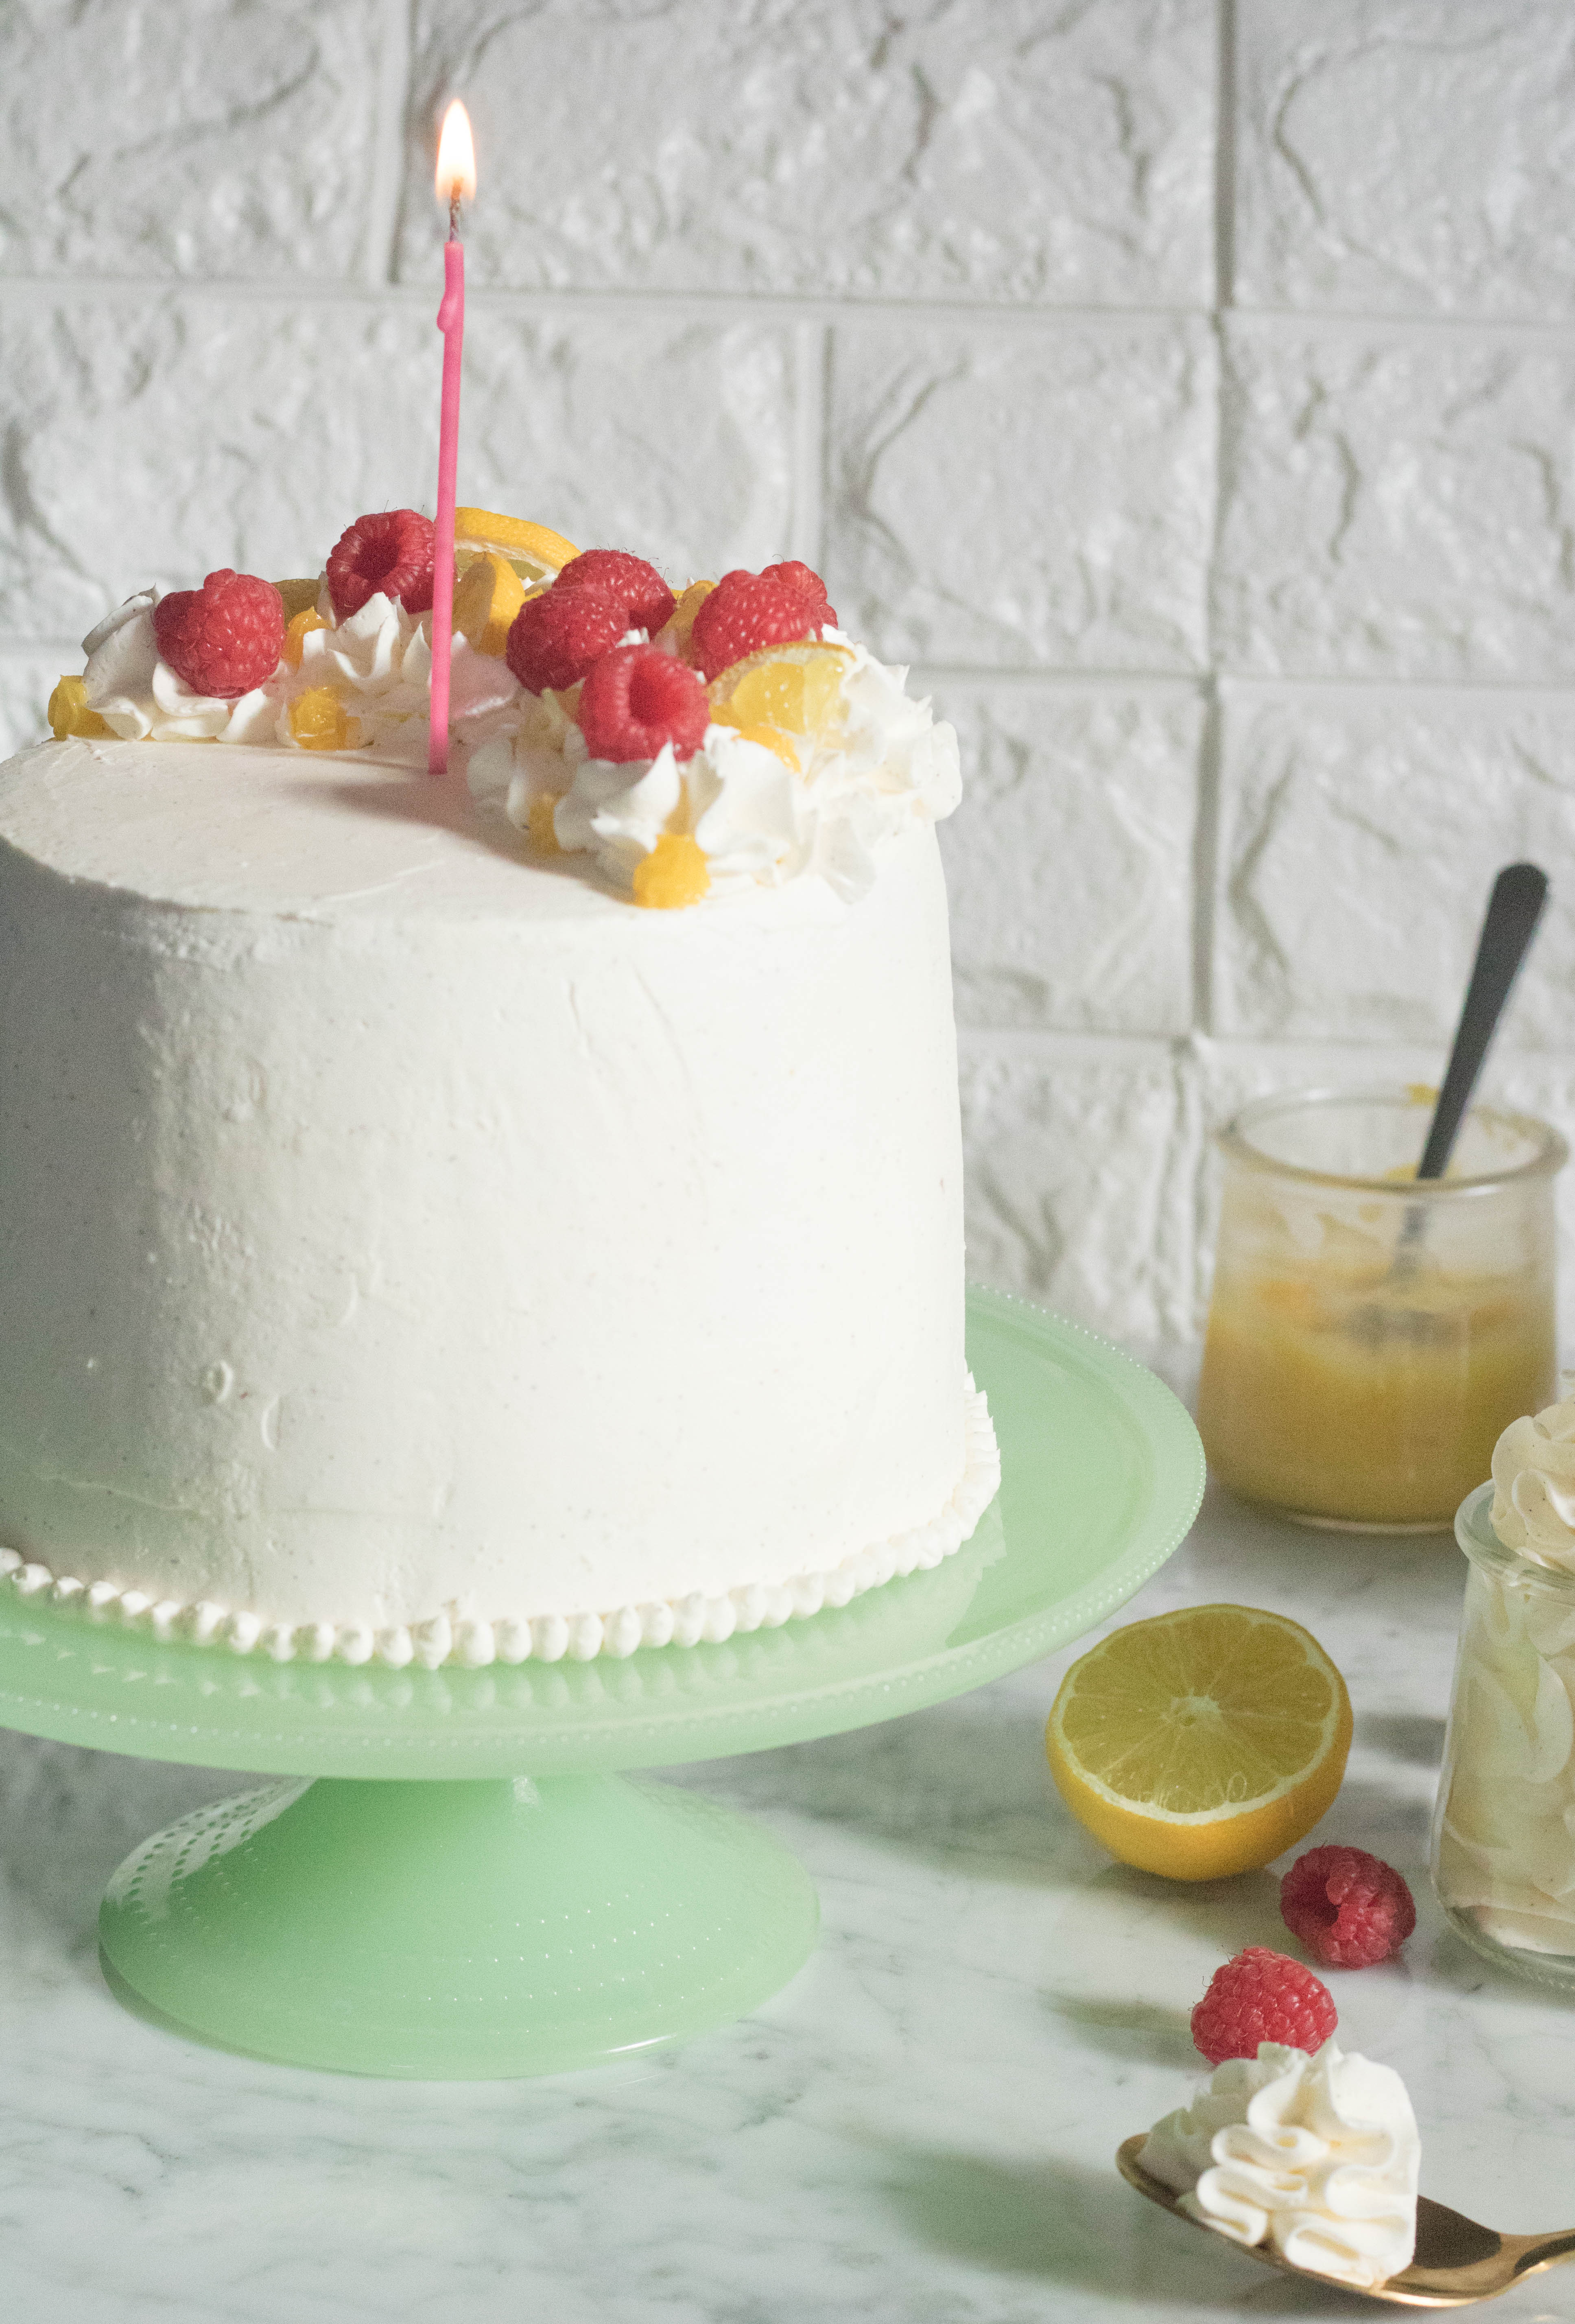 Vanilla cake with lemon curd and Italian meringue buttercream for stress baking